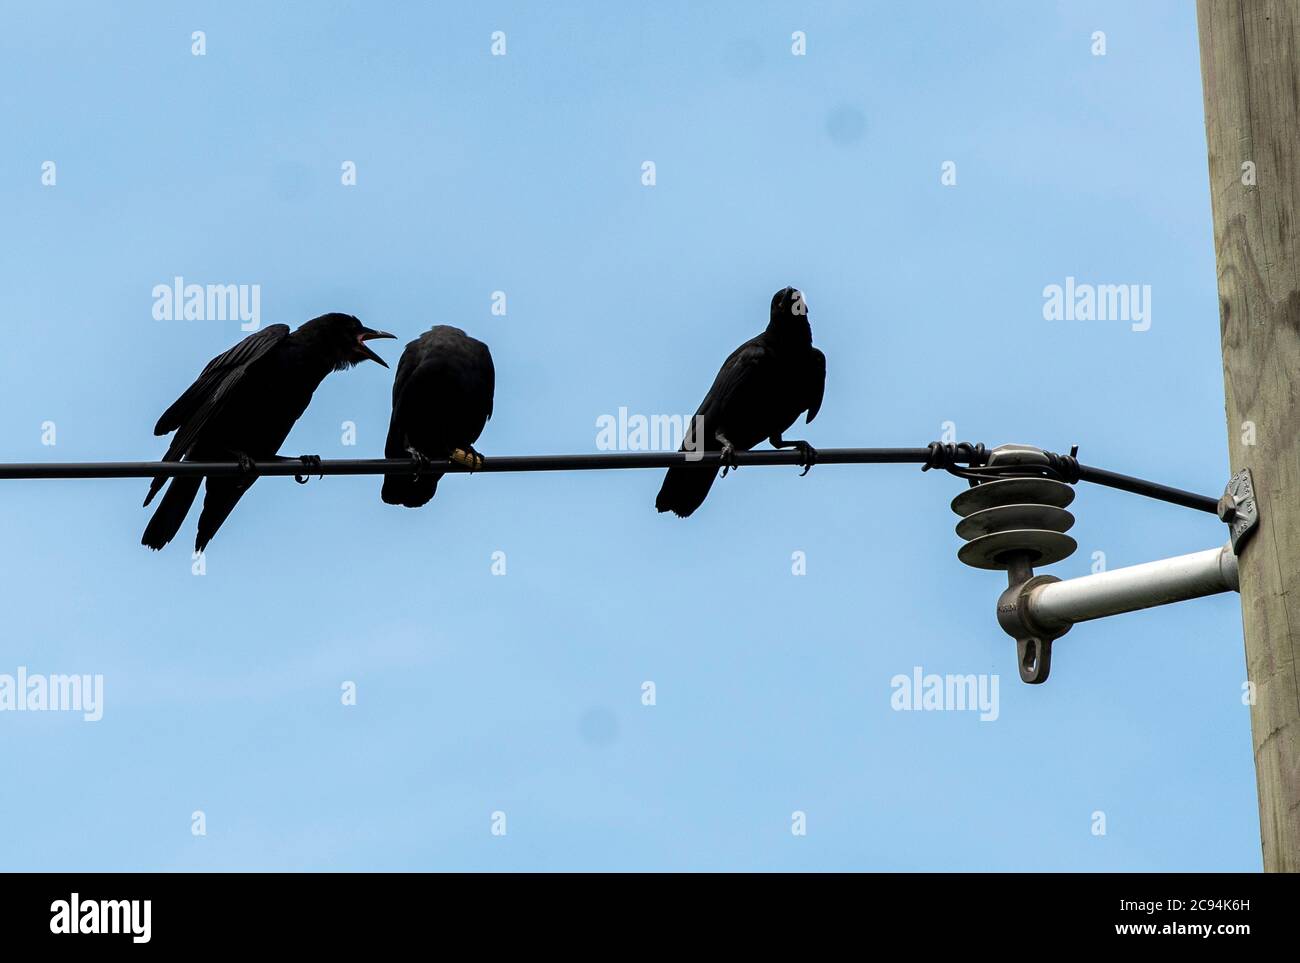 Big black bird clinging to a pole Stock Photo